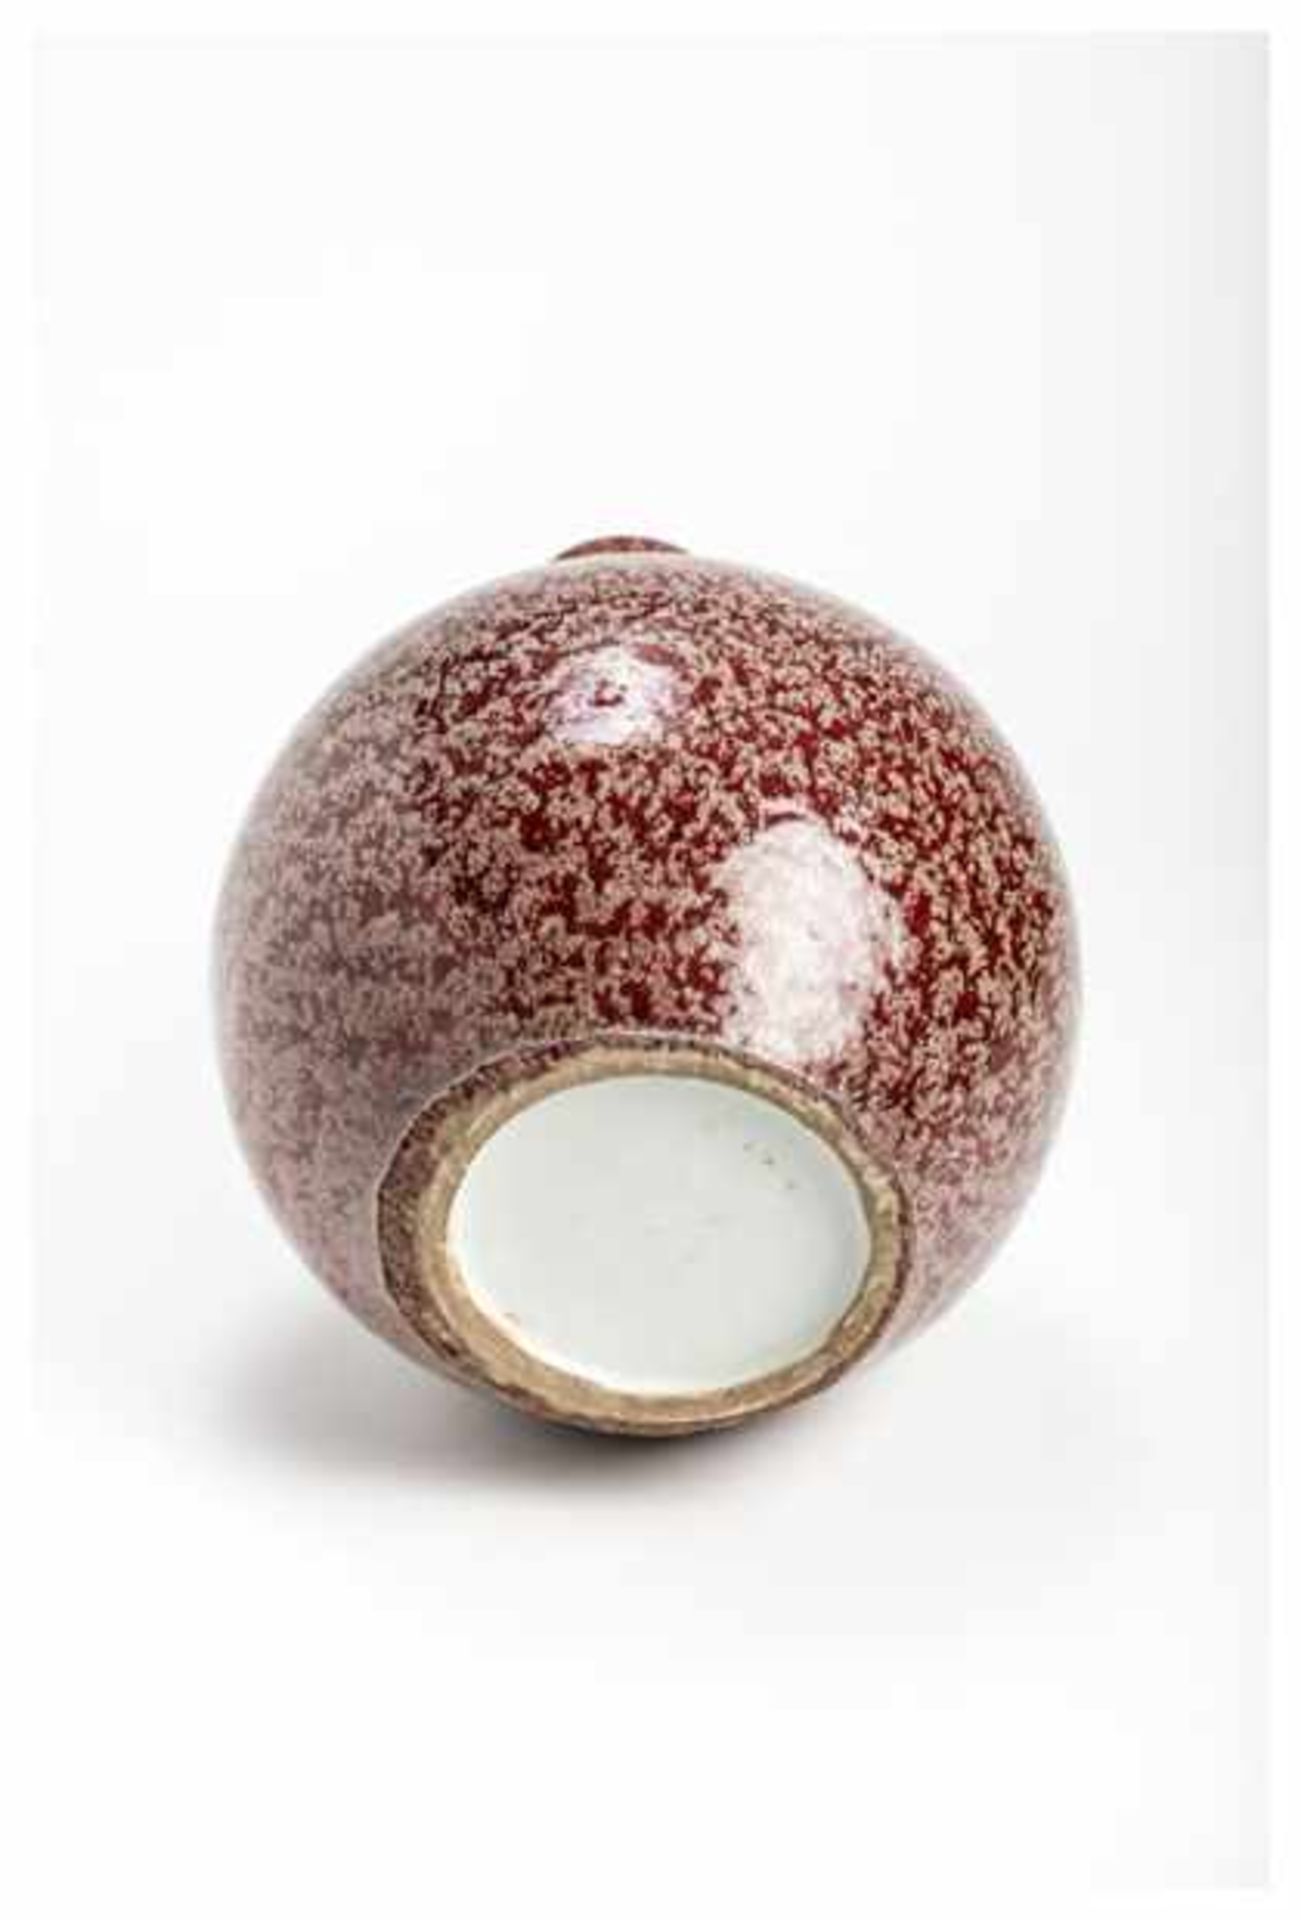 A PORCELAIN VASE WITH MOTTLED CREAM GLAZE Porcelain. China, Qing dynastyOf globular form with a - Image 2 of 3